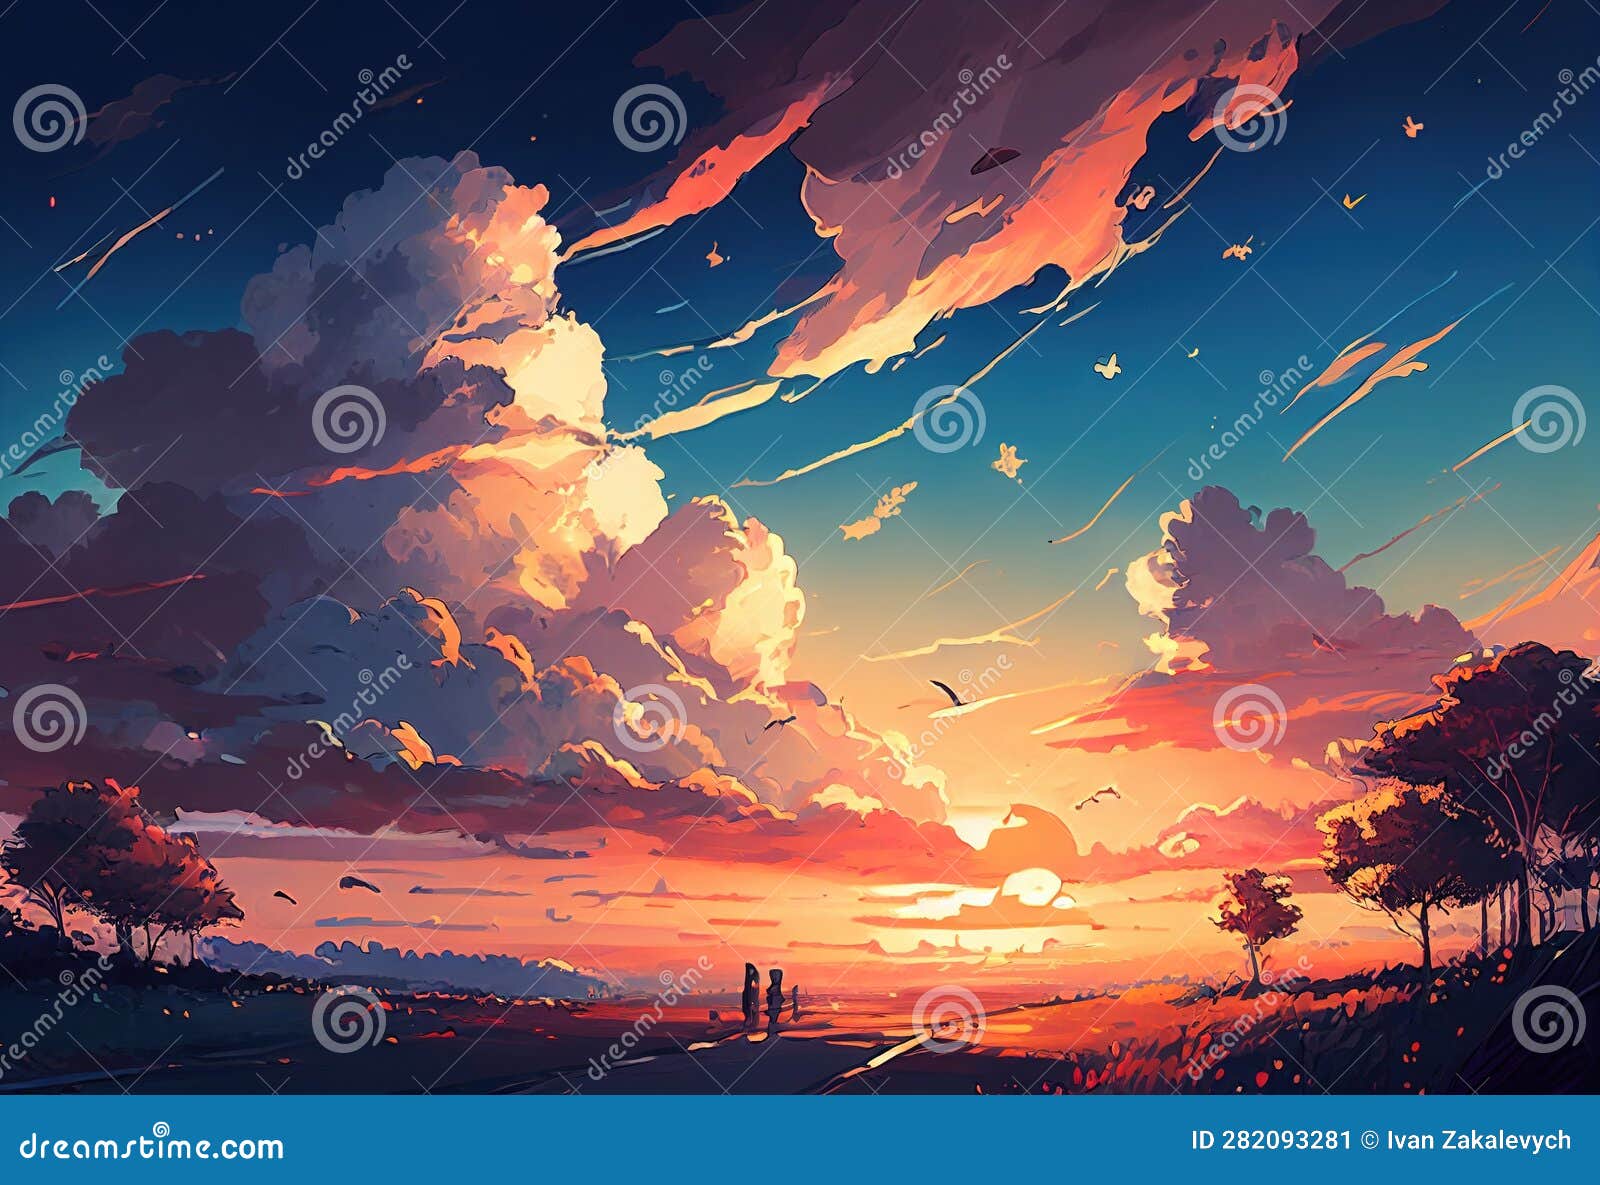 Anime landscape 4k Wallpaper by CYBERxYT on DeviantArt-demhanvico.com.vn